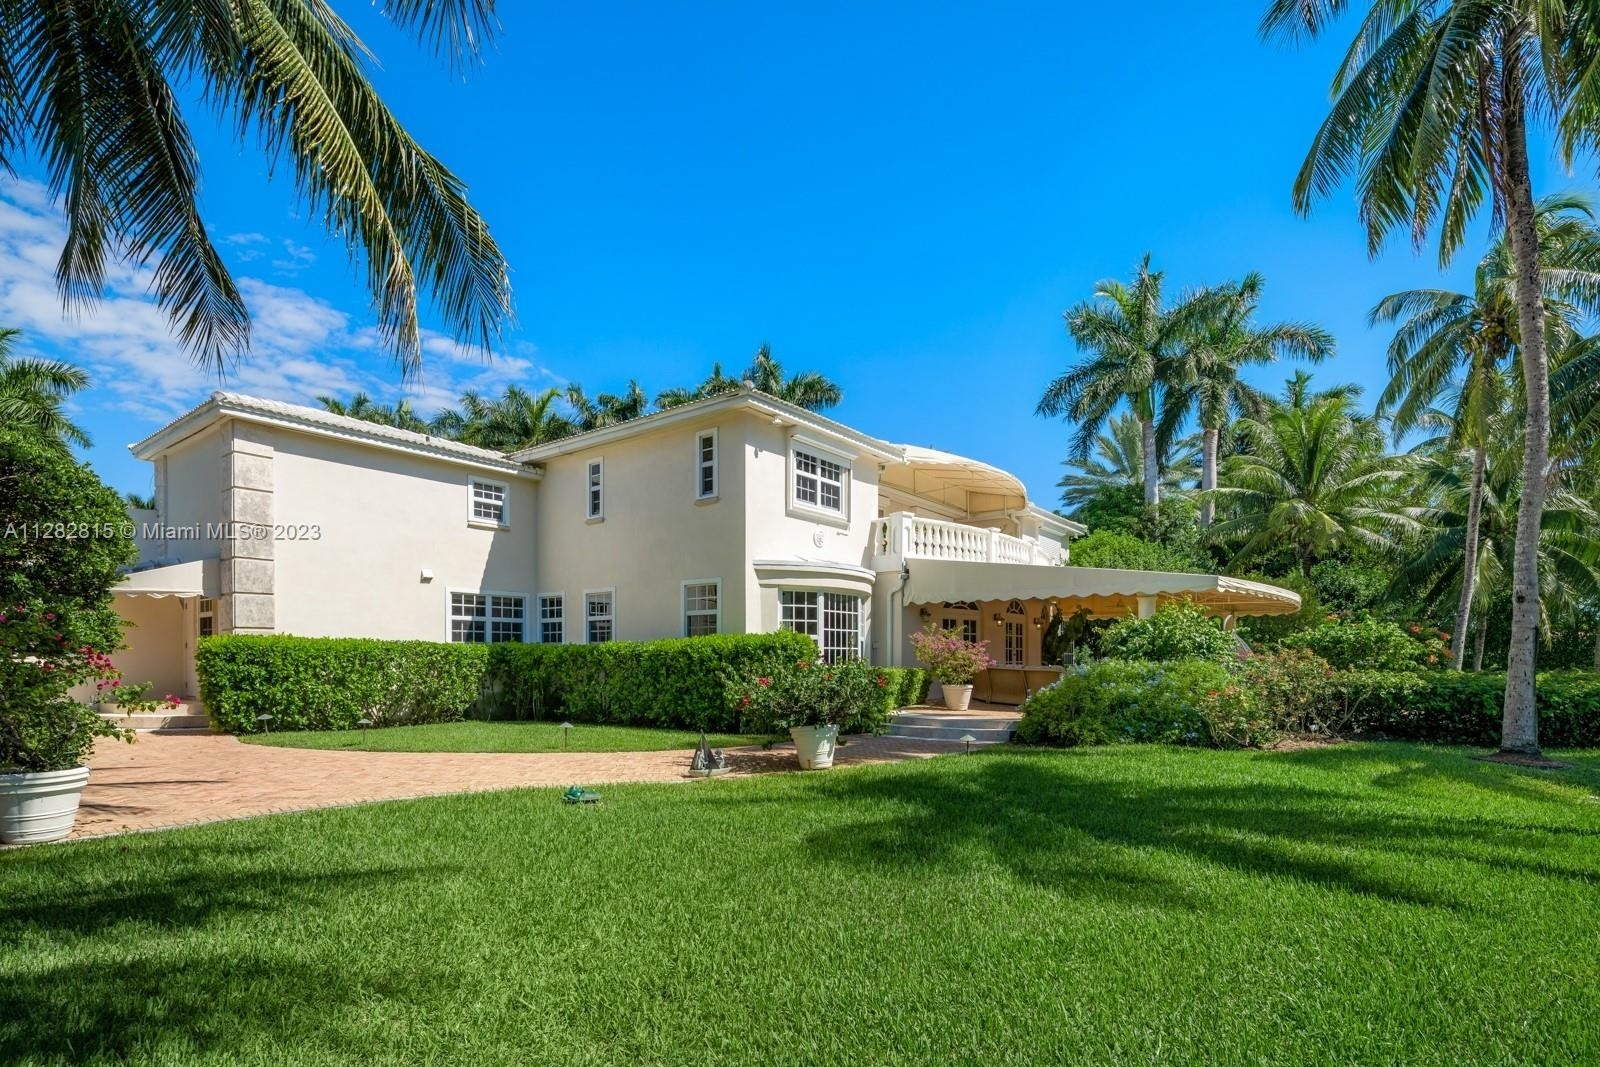 38. Single Family Homes for Sale at Bayshore, Miami Beach, FL 33140